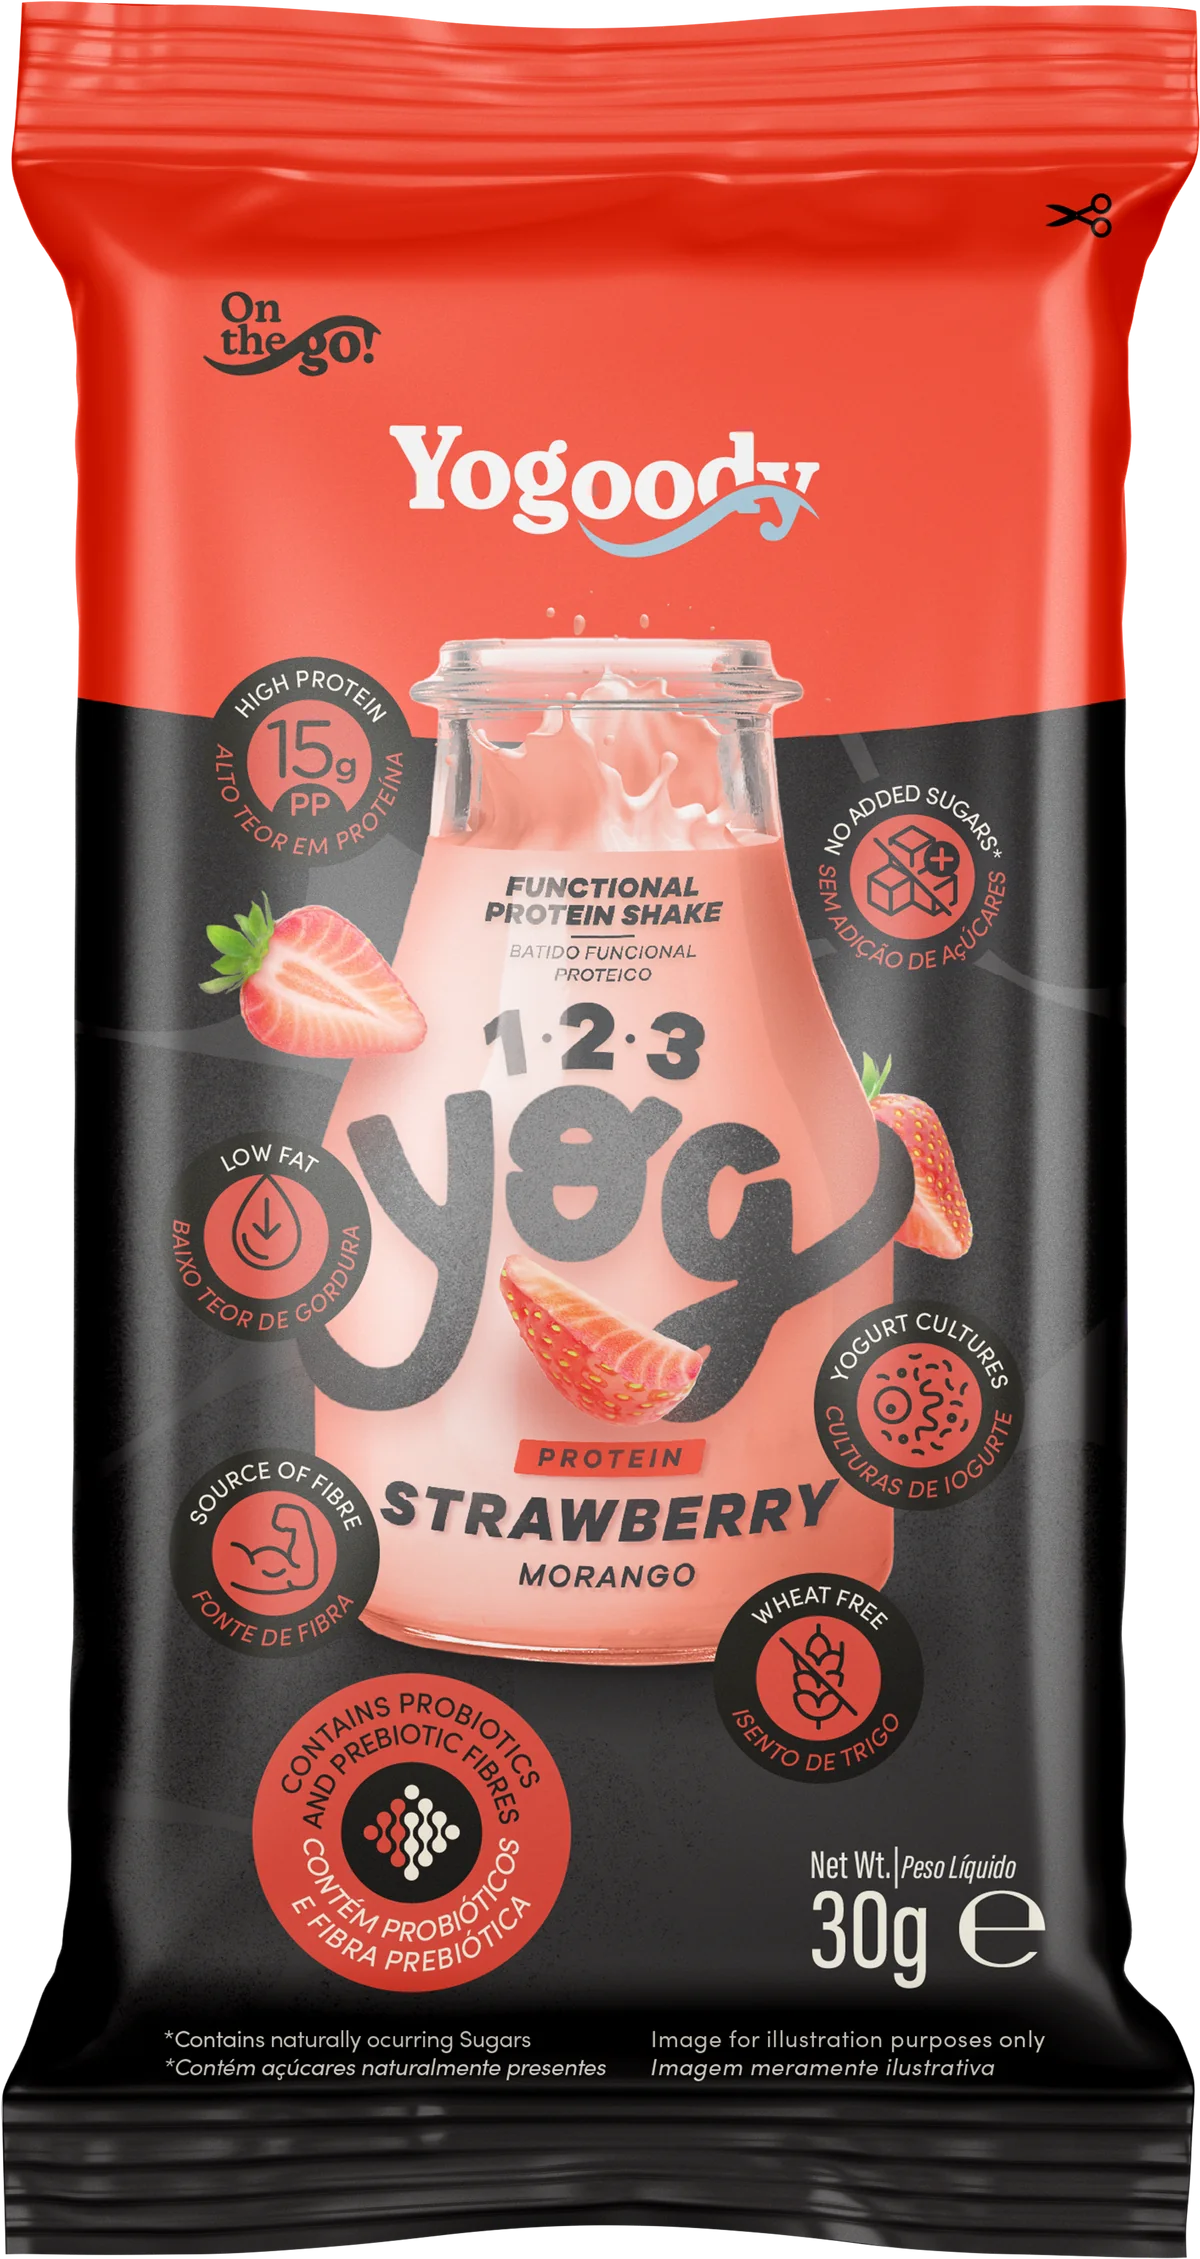 Welcome Pack - 1.2.3. YOG Protein Banana and Strawberry Shakes (10 x 30g sachets + FREE shaker)